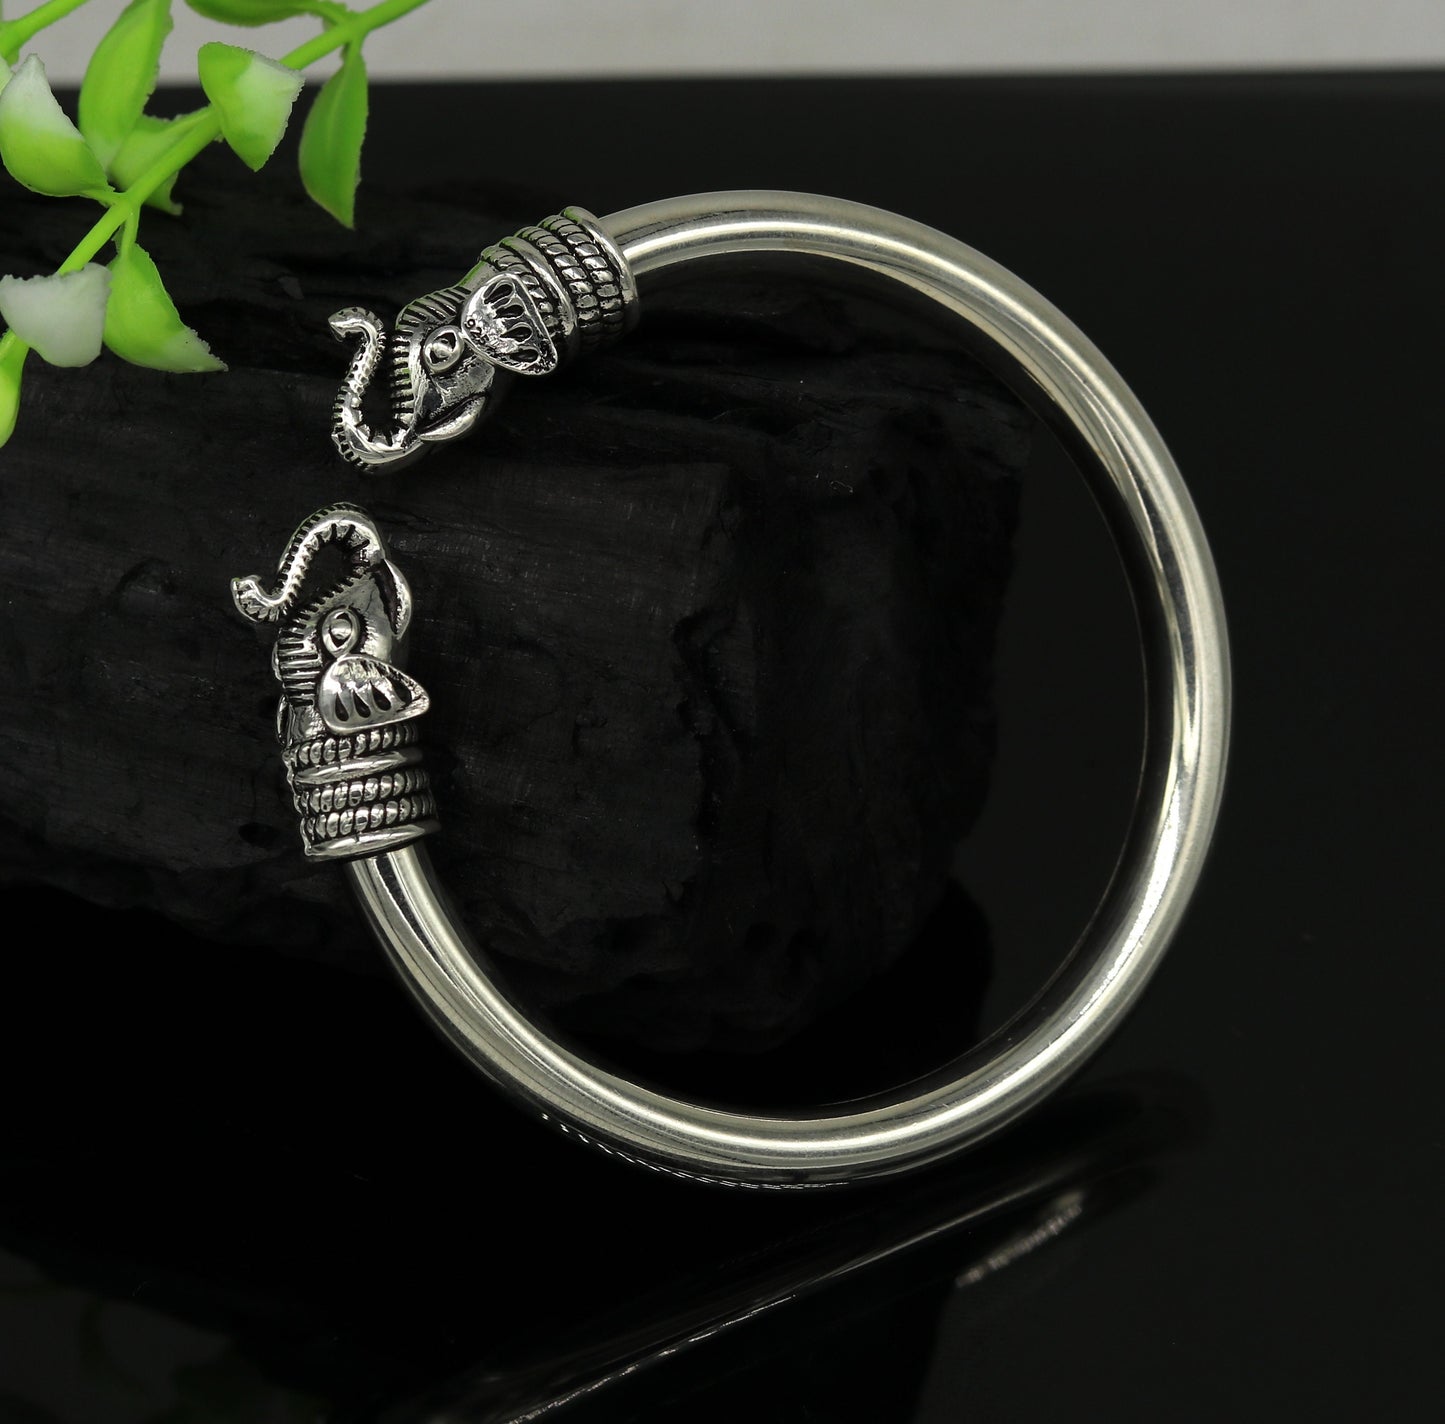 925 sterling silver handmade Plain shiny elephant design bangle bracelet kada, fabulous unisex gifting personalized jewelry nsk386 - TRIBAL ORNAMENTS